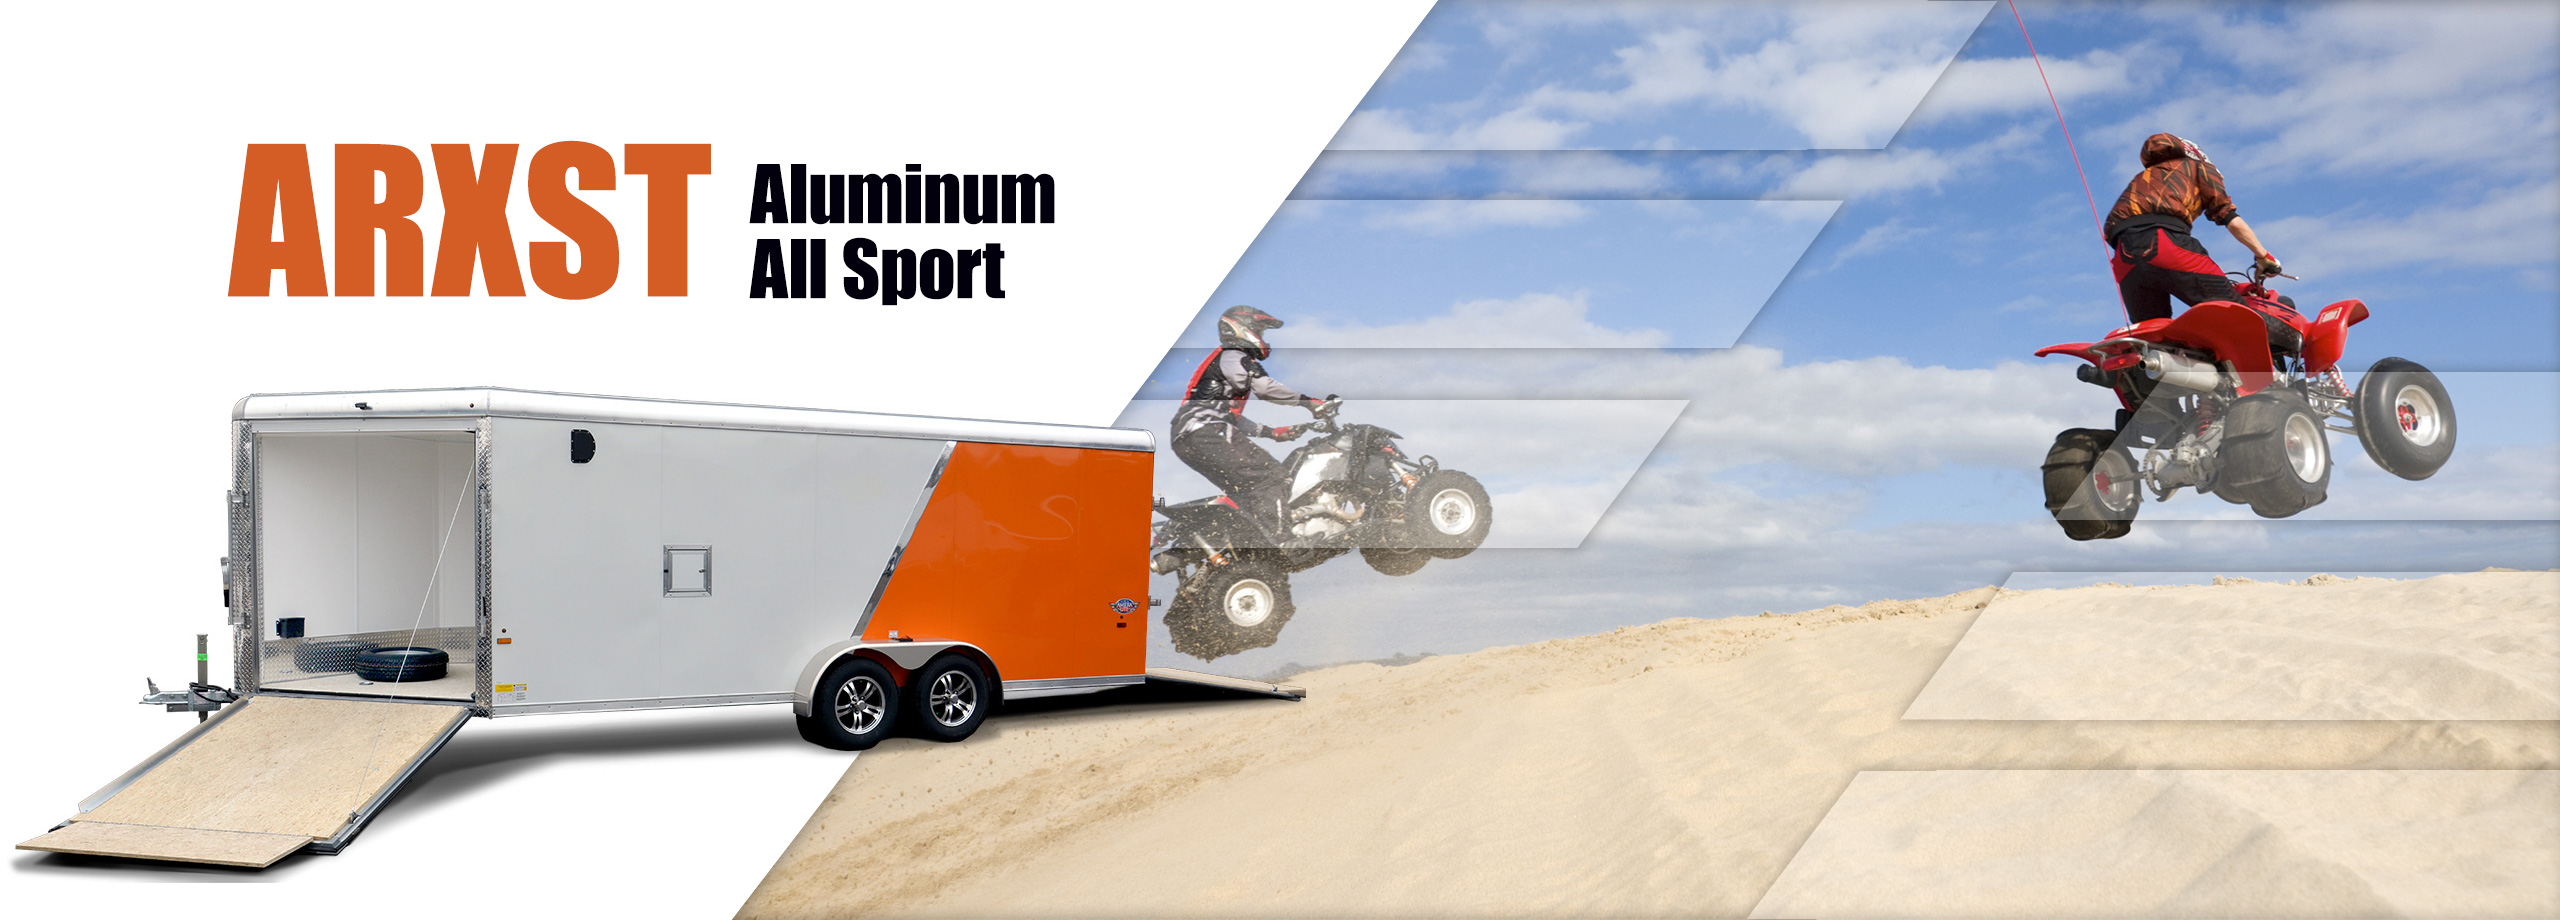 ARXST Aluminum all sport trailer